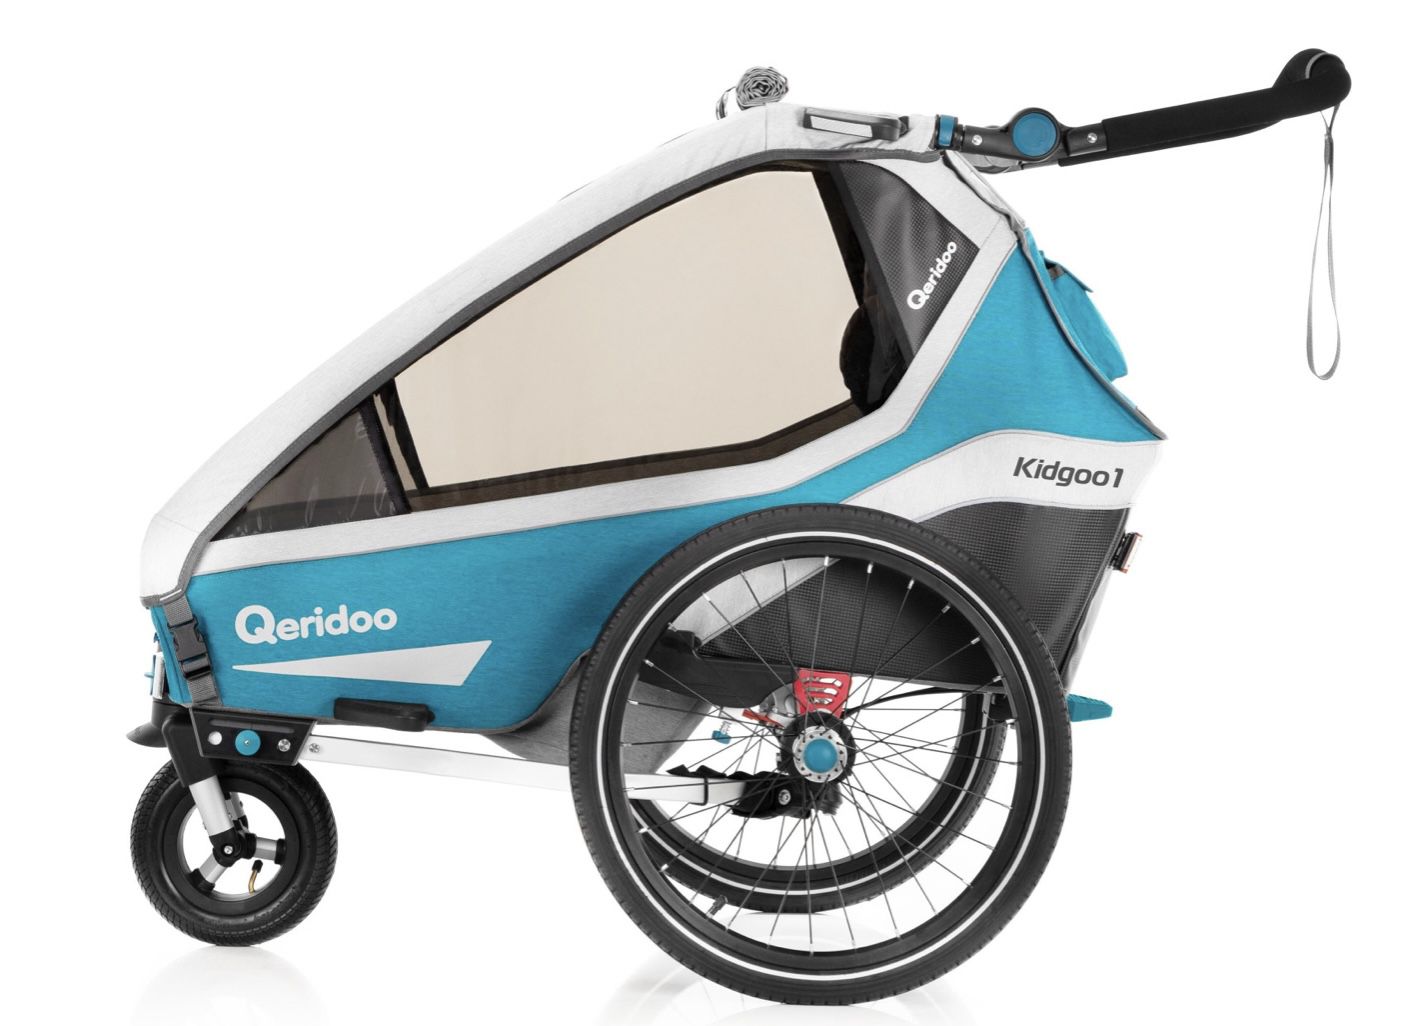 Qeridoo KidGoo1 (2020) Fahrradanhänger für 297,13€ (statt 445€)